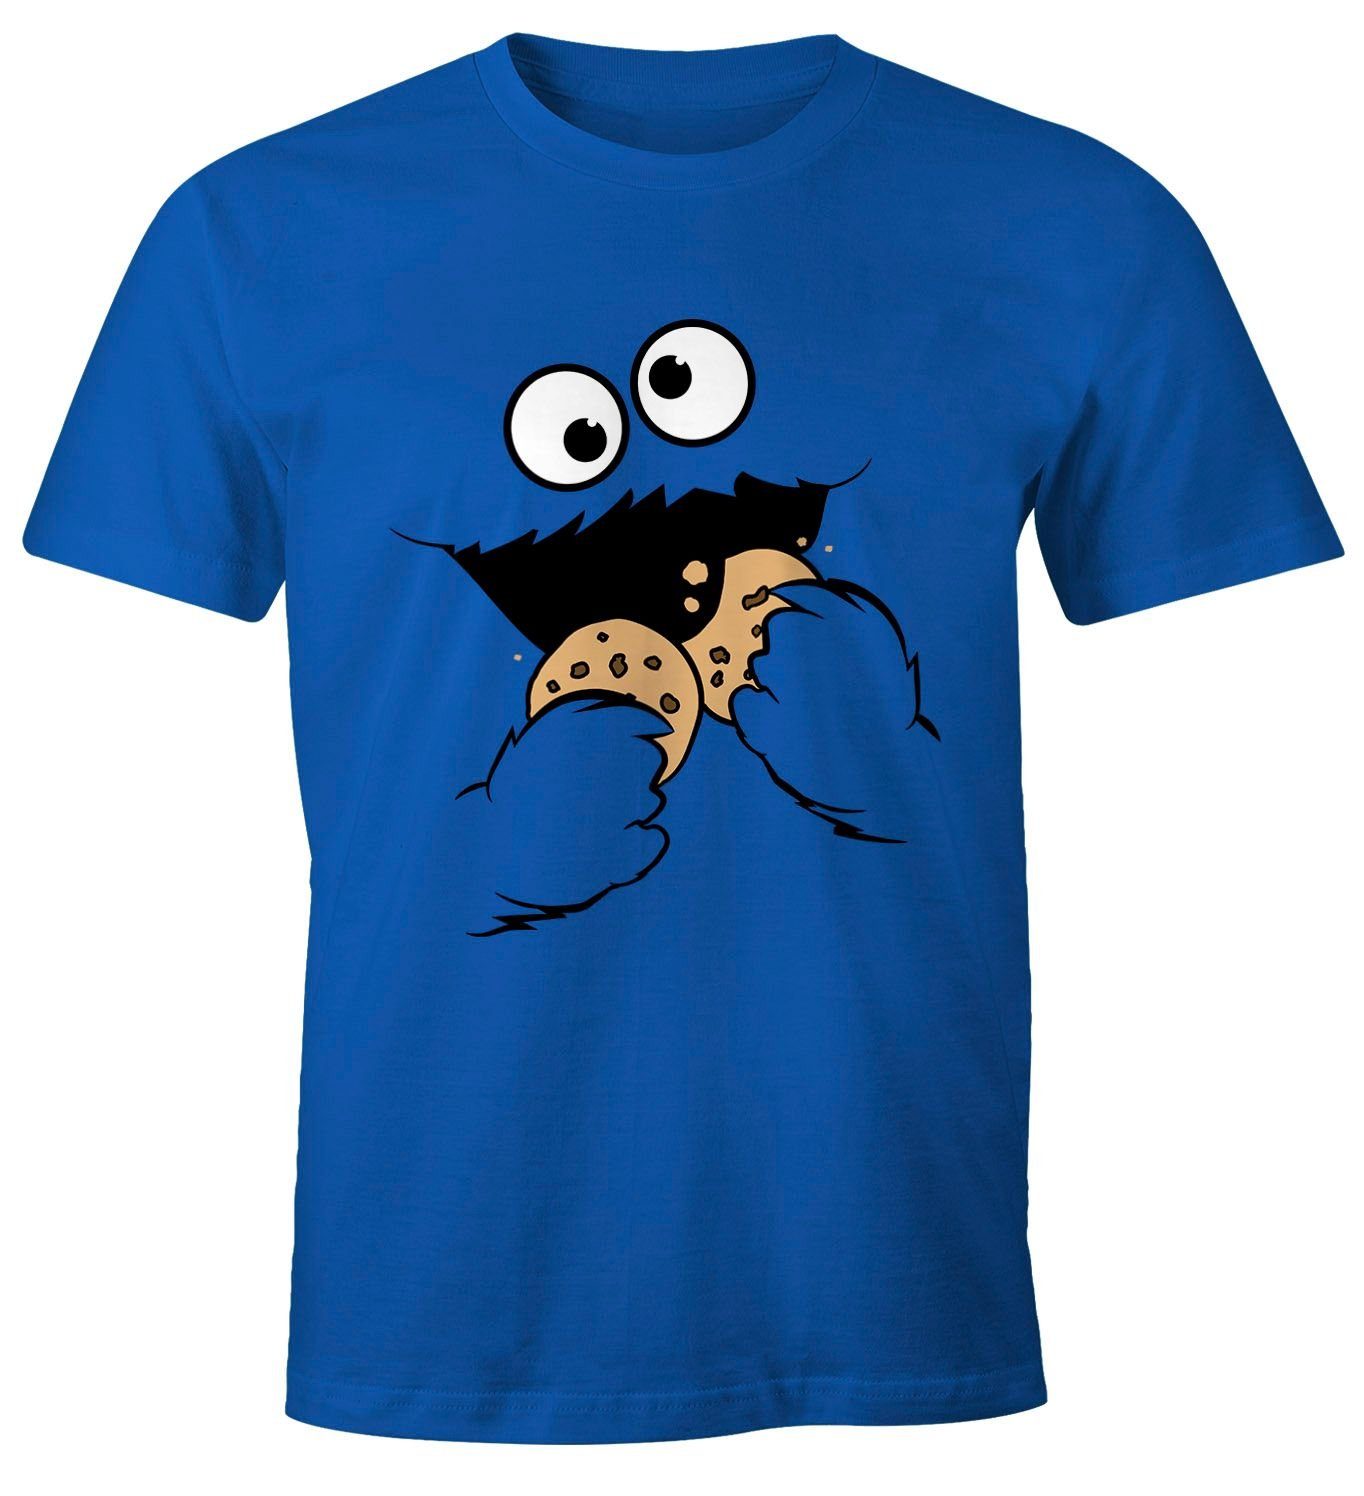 MoonWorks Print-Shirt »Herren T-Shirt Krümelmonster Keks Cookie Monster  Fasching Karneval Kostüm Moonworks®« mit Print online kaufen | OTTO